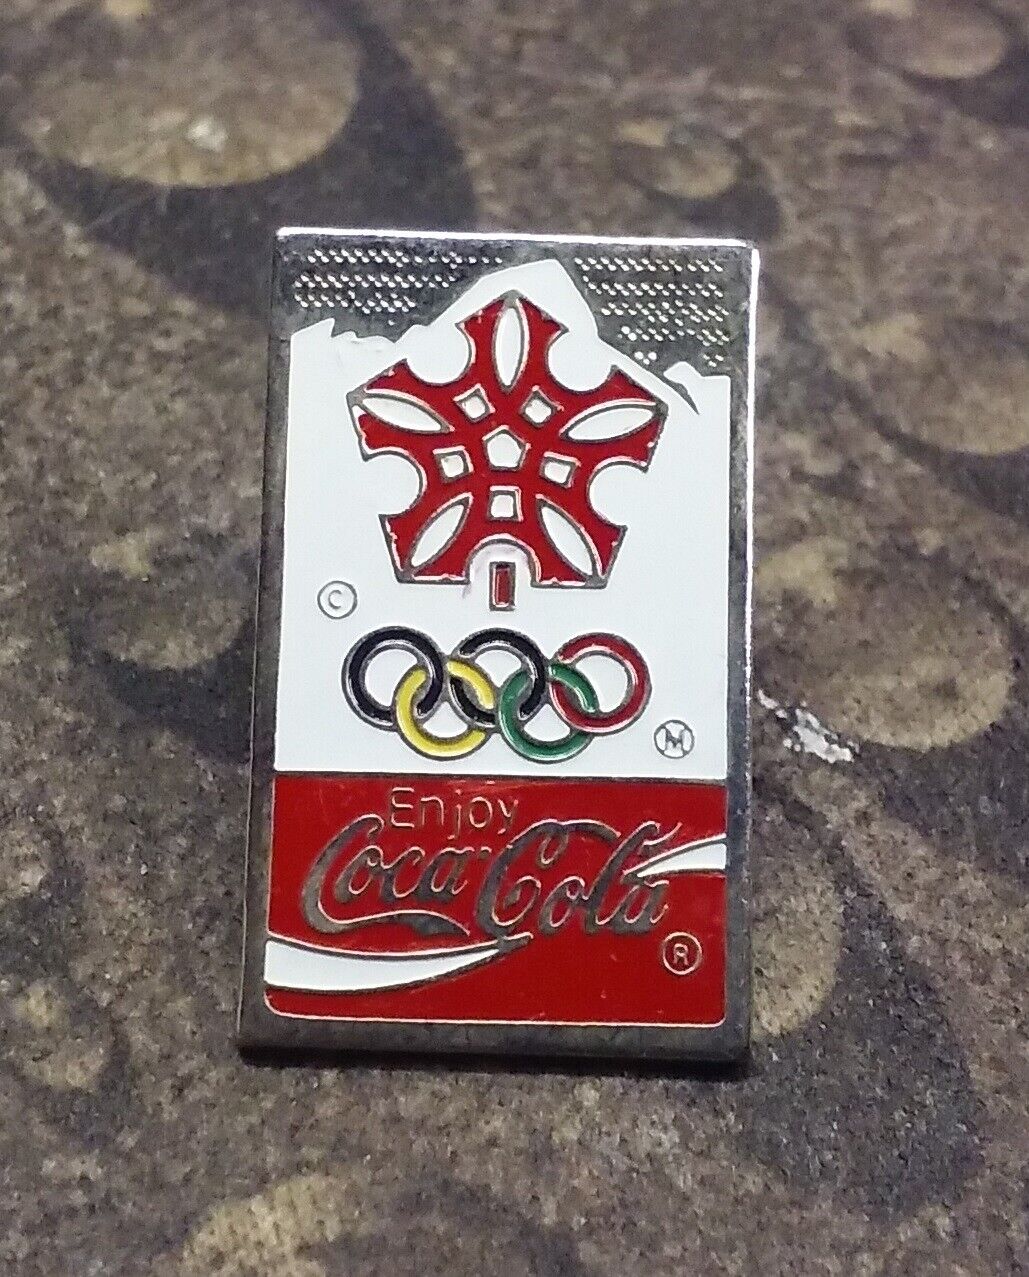 Coca Cola pin badge Calgary Winter Olympics